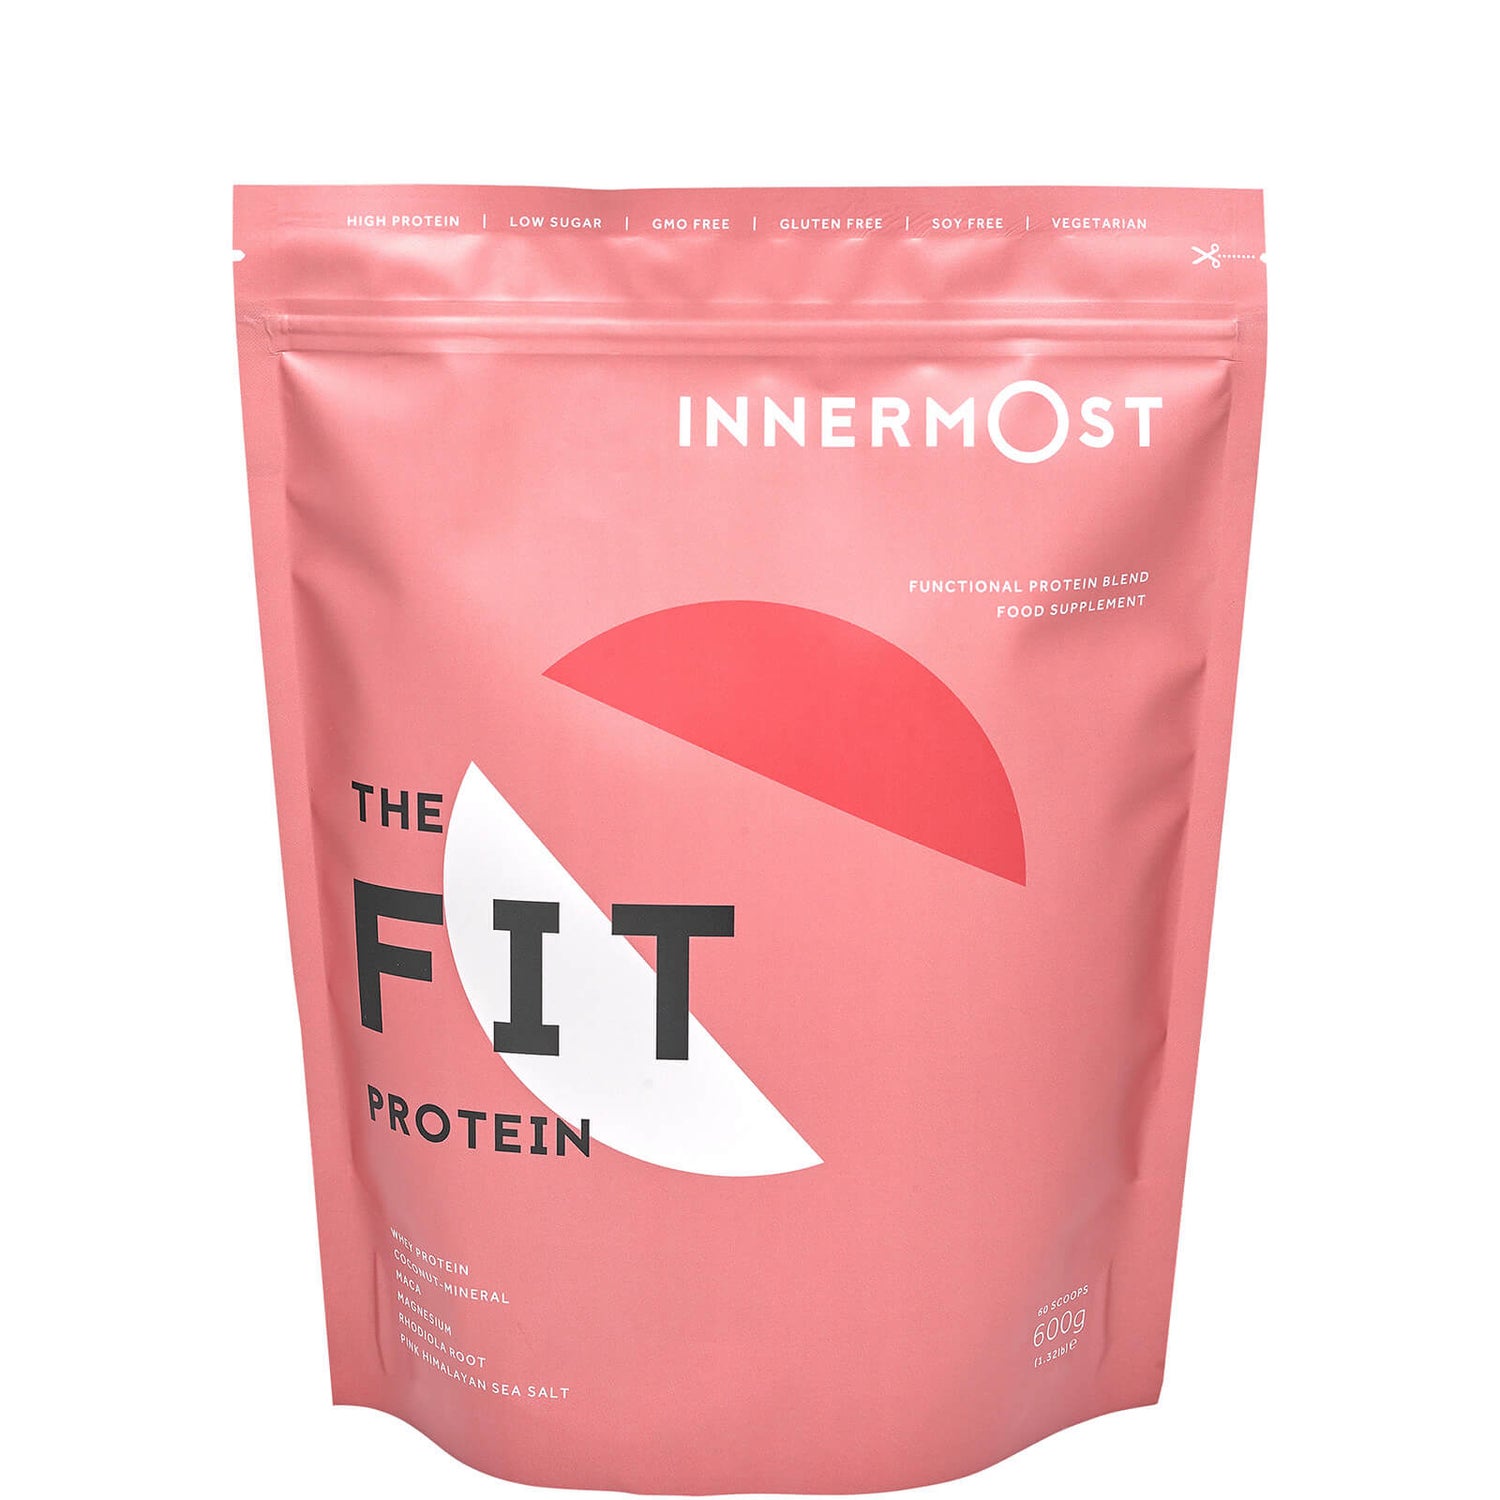 Innermost The Fit Protein - Vanilla